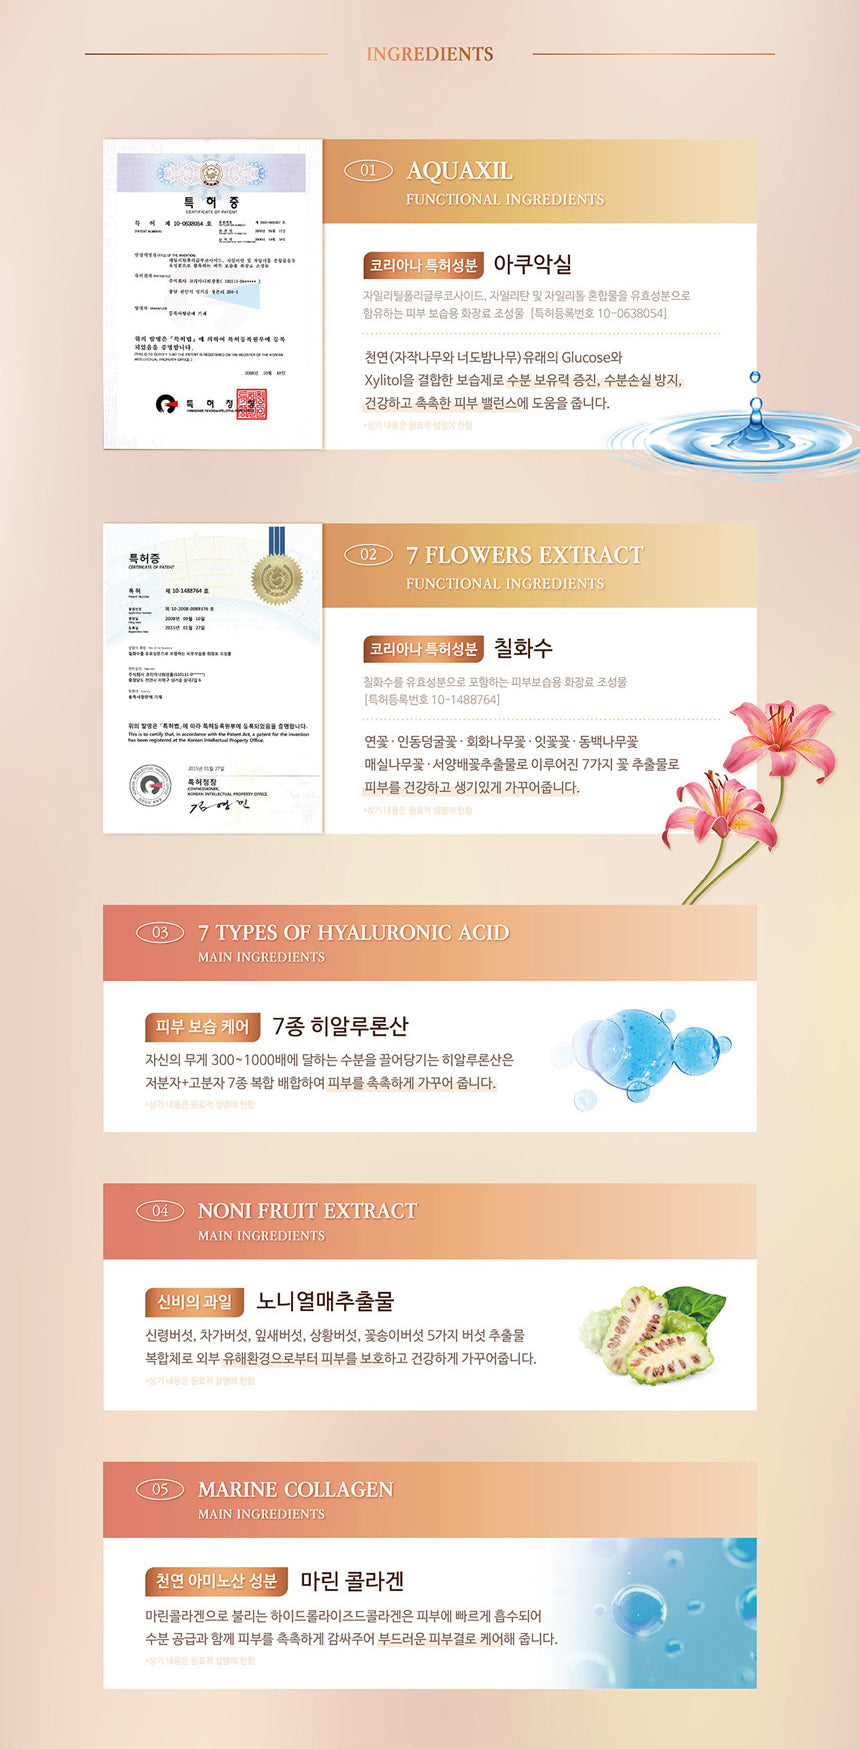 Coreana Orthia Perfect Collagen 24K Rose Gold Essence Hydro Barrier Cream 100ml